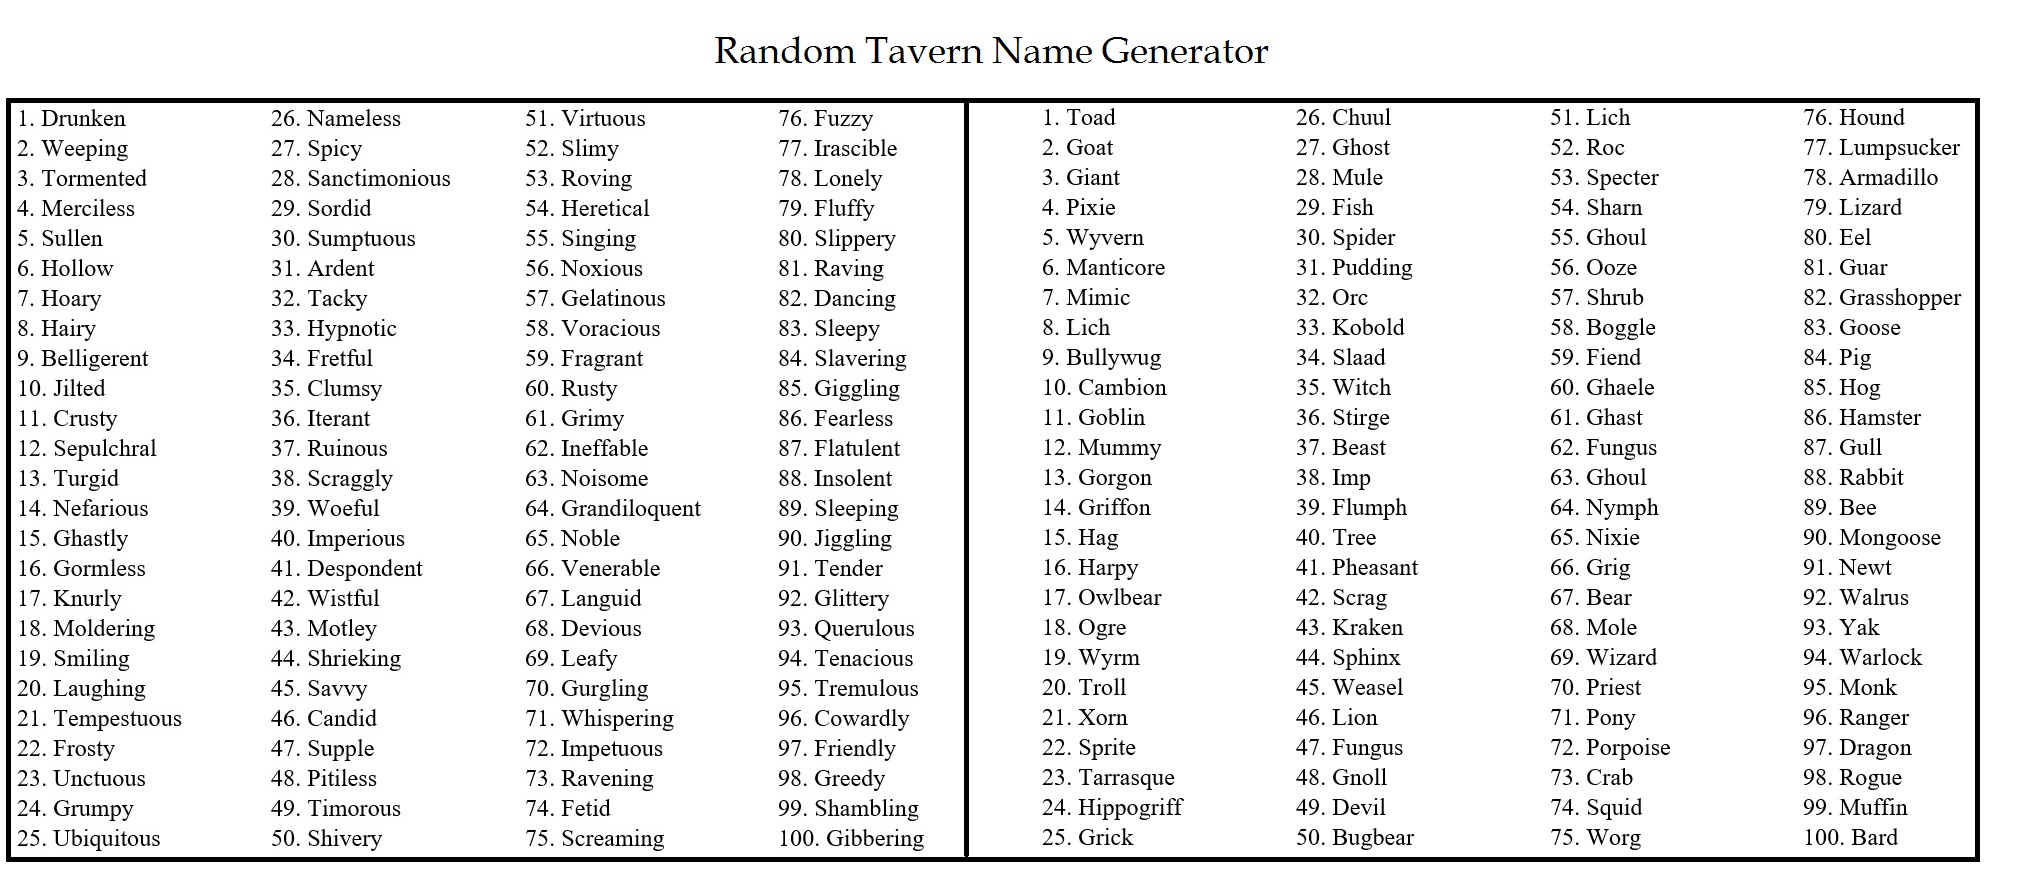 Random Tavern Name Generator